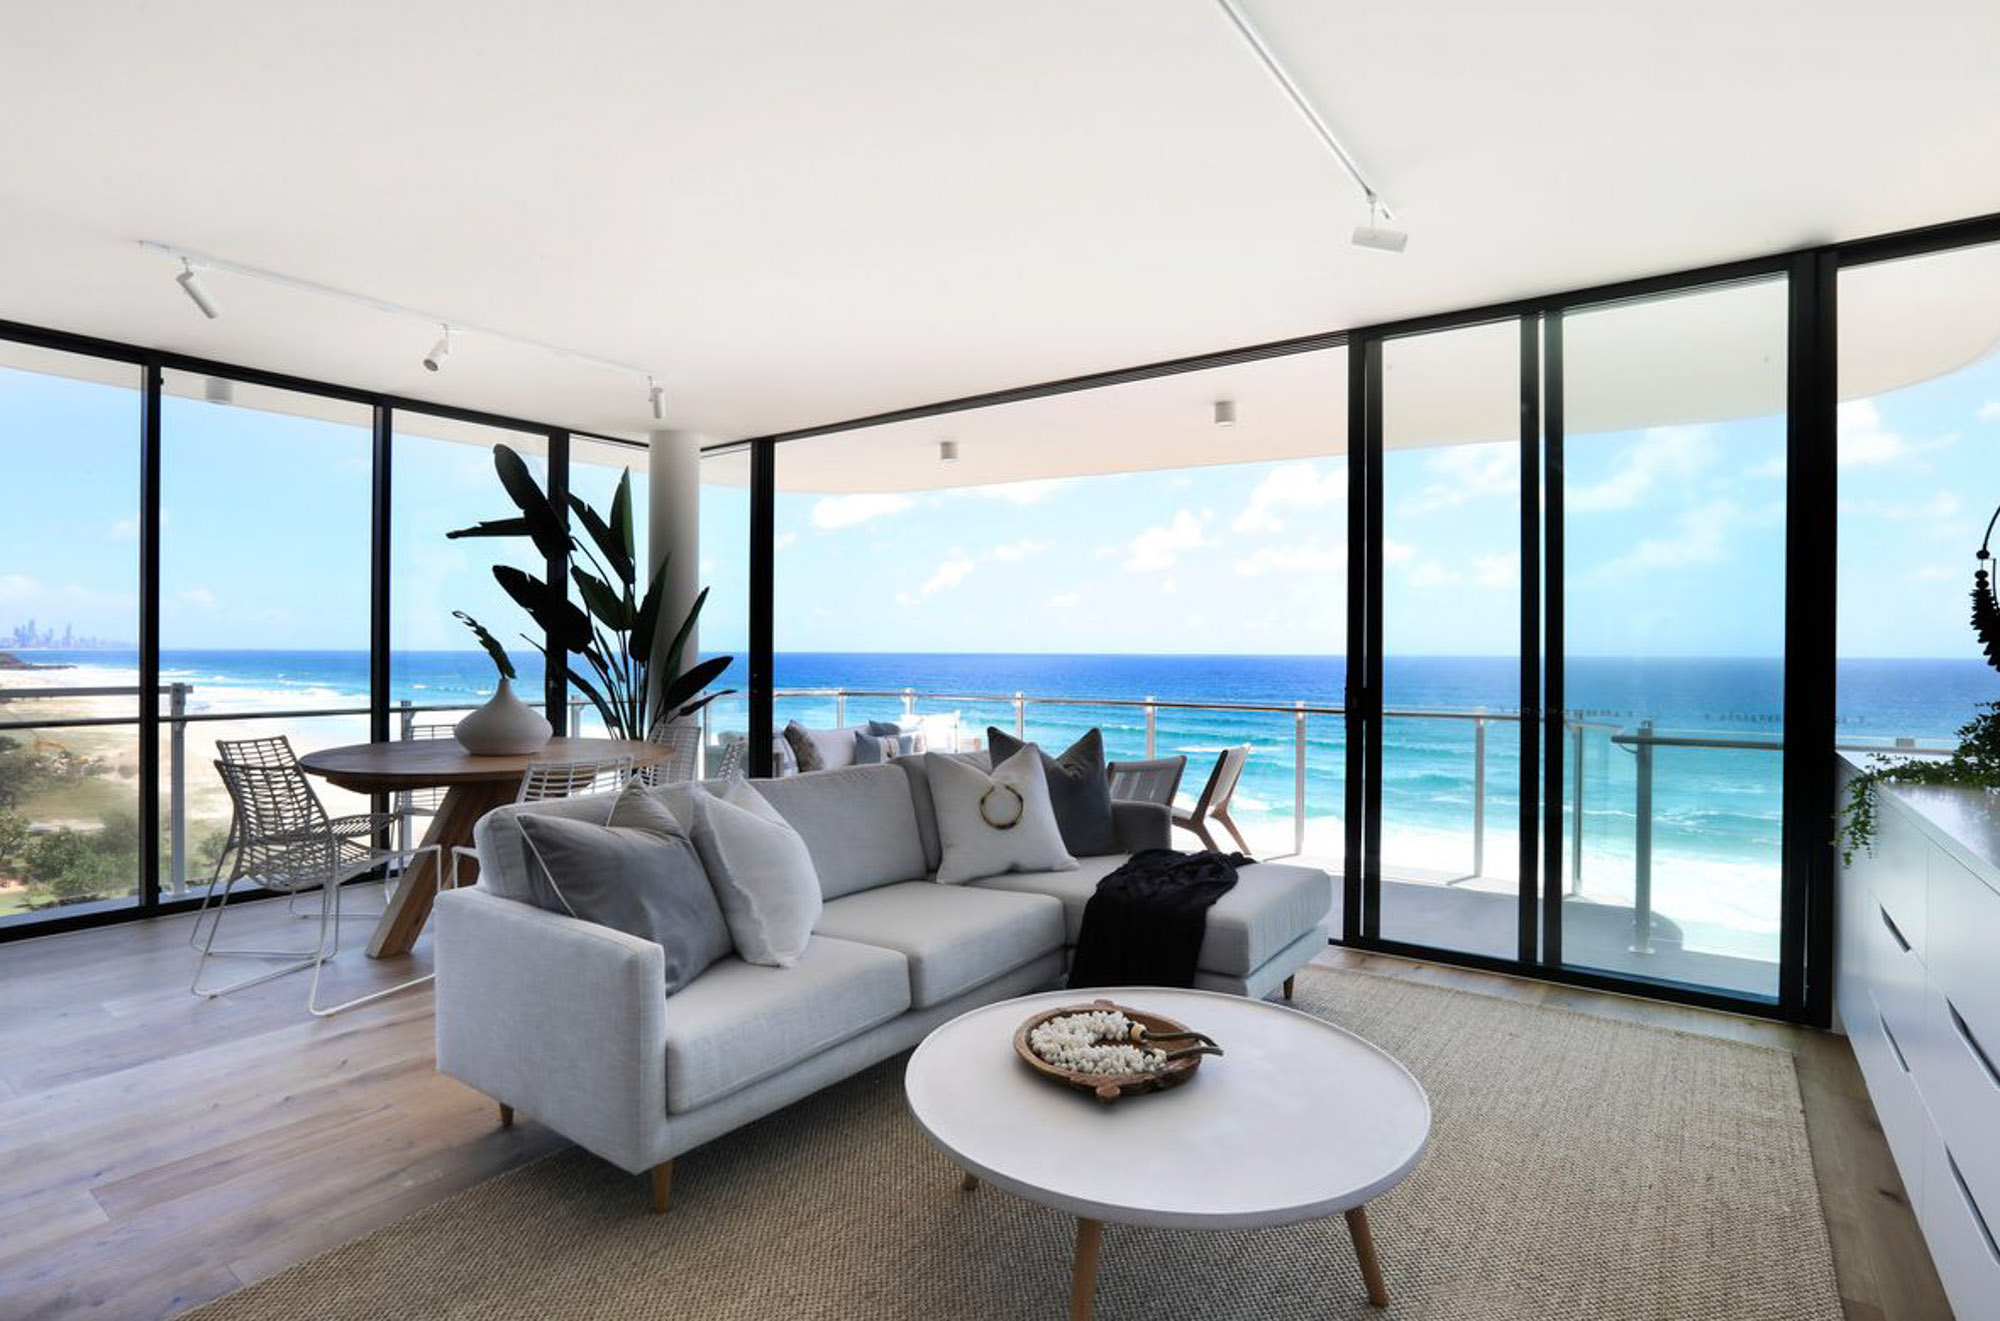 www.theprestigepropertymagazine.com - The Prestige Property Magazine - Absolute Beachfront